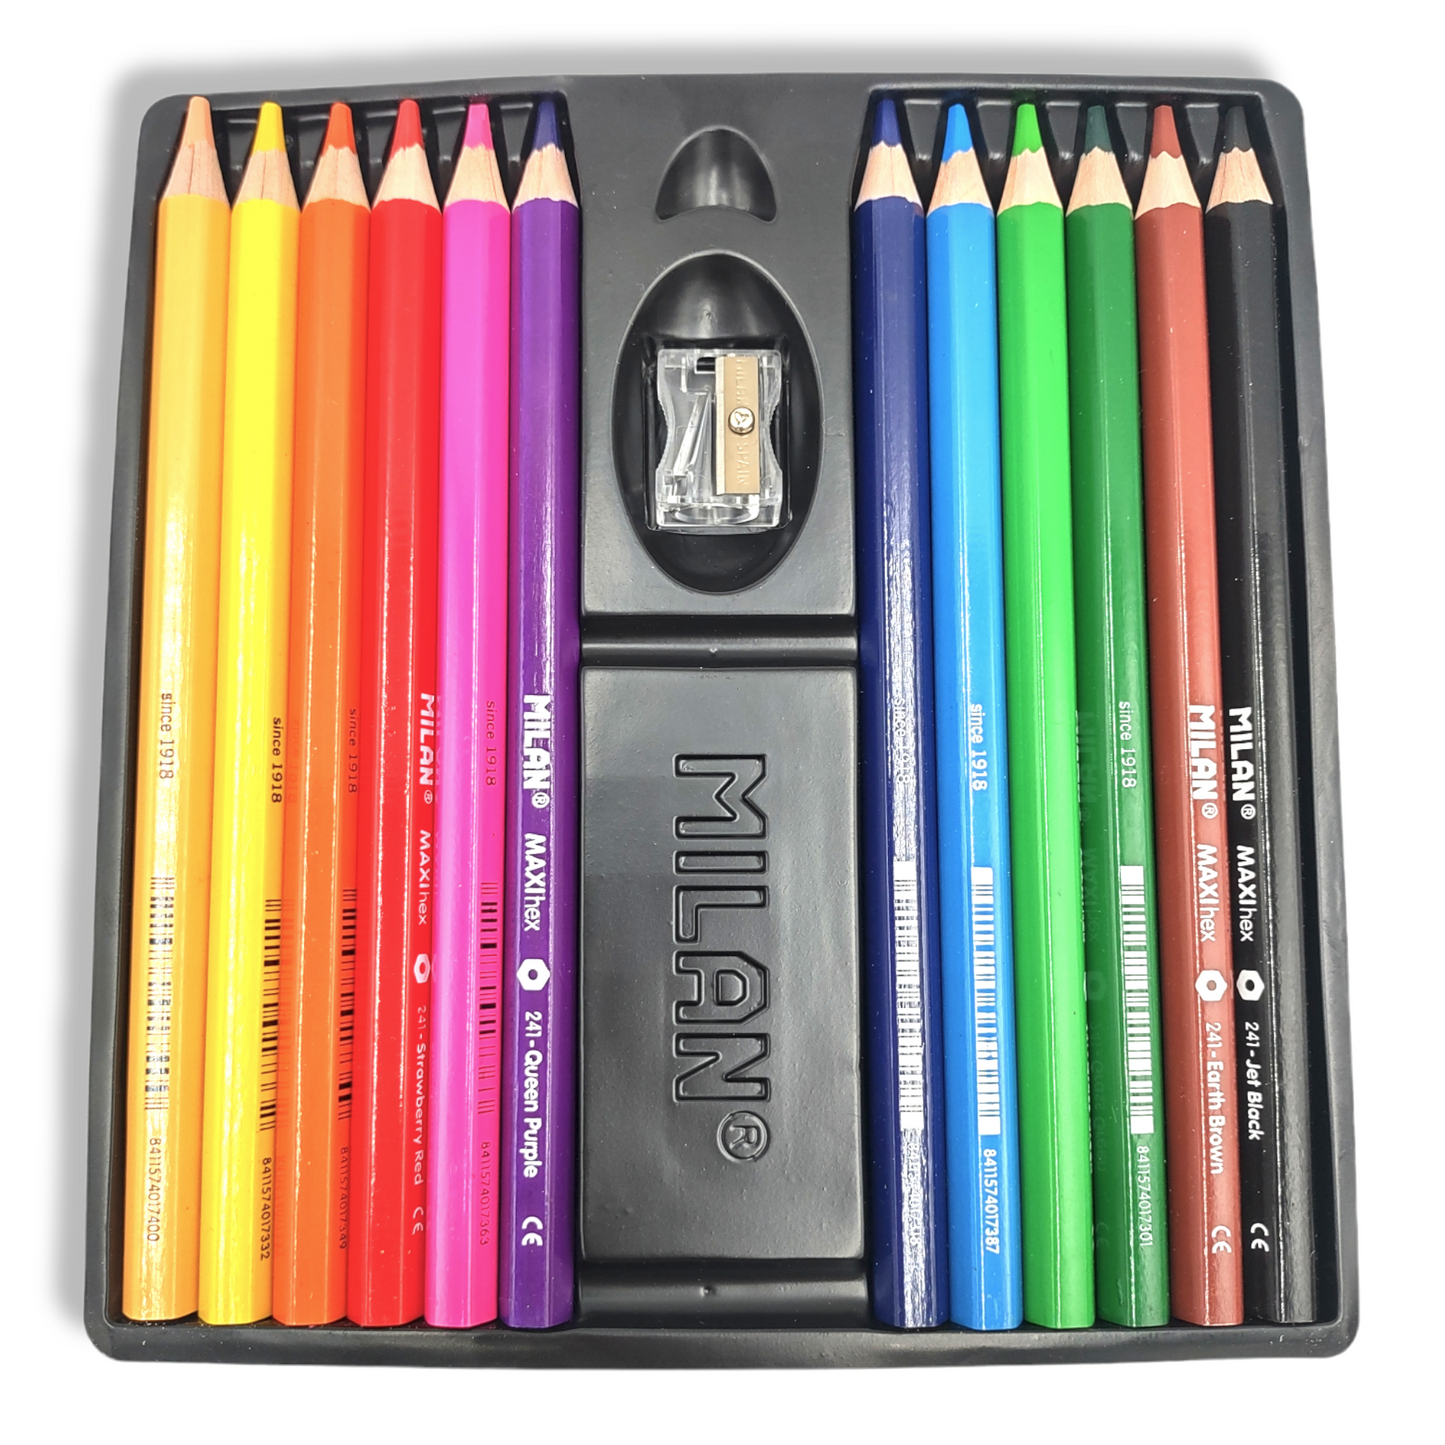 Milan MAXI-Hex Colored Pencils Pack of 12 + Sharpener Kids Arts and Crafts Pencils - Anti Break Lead